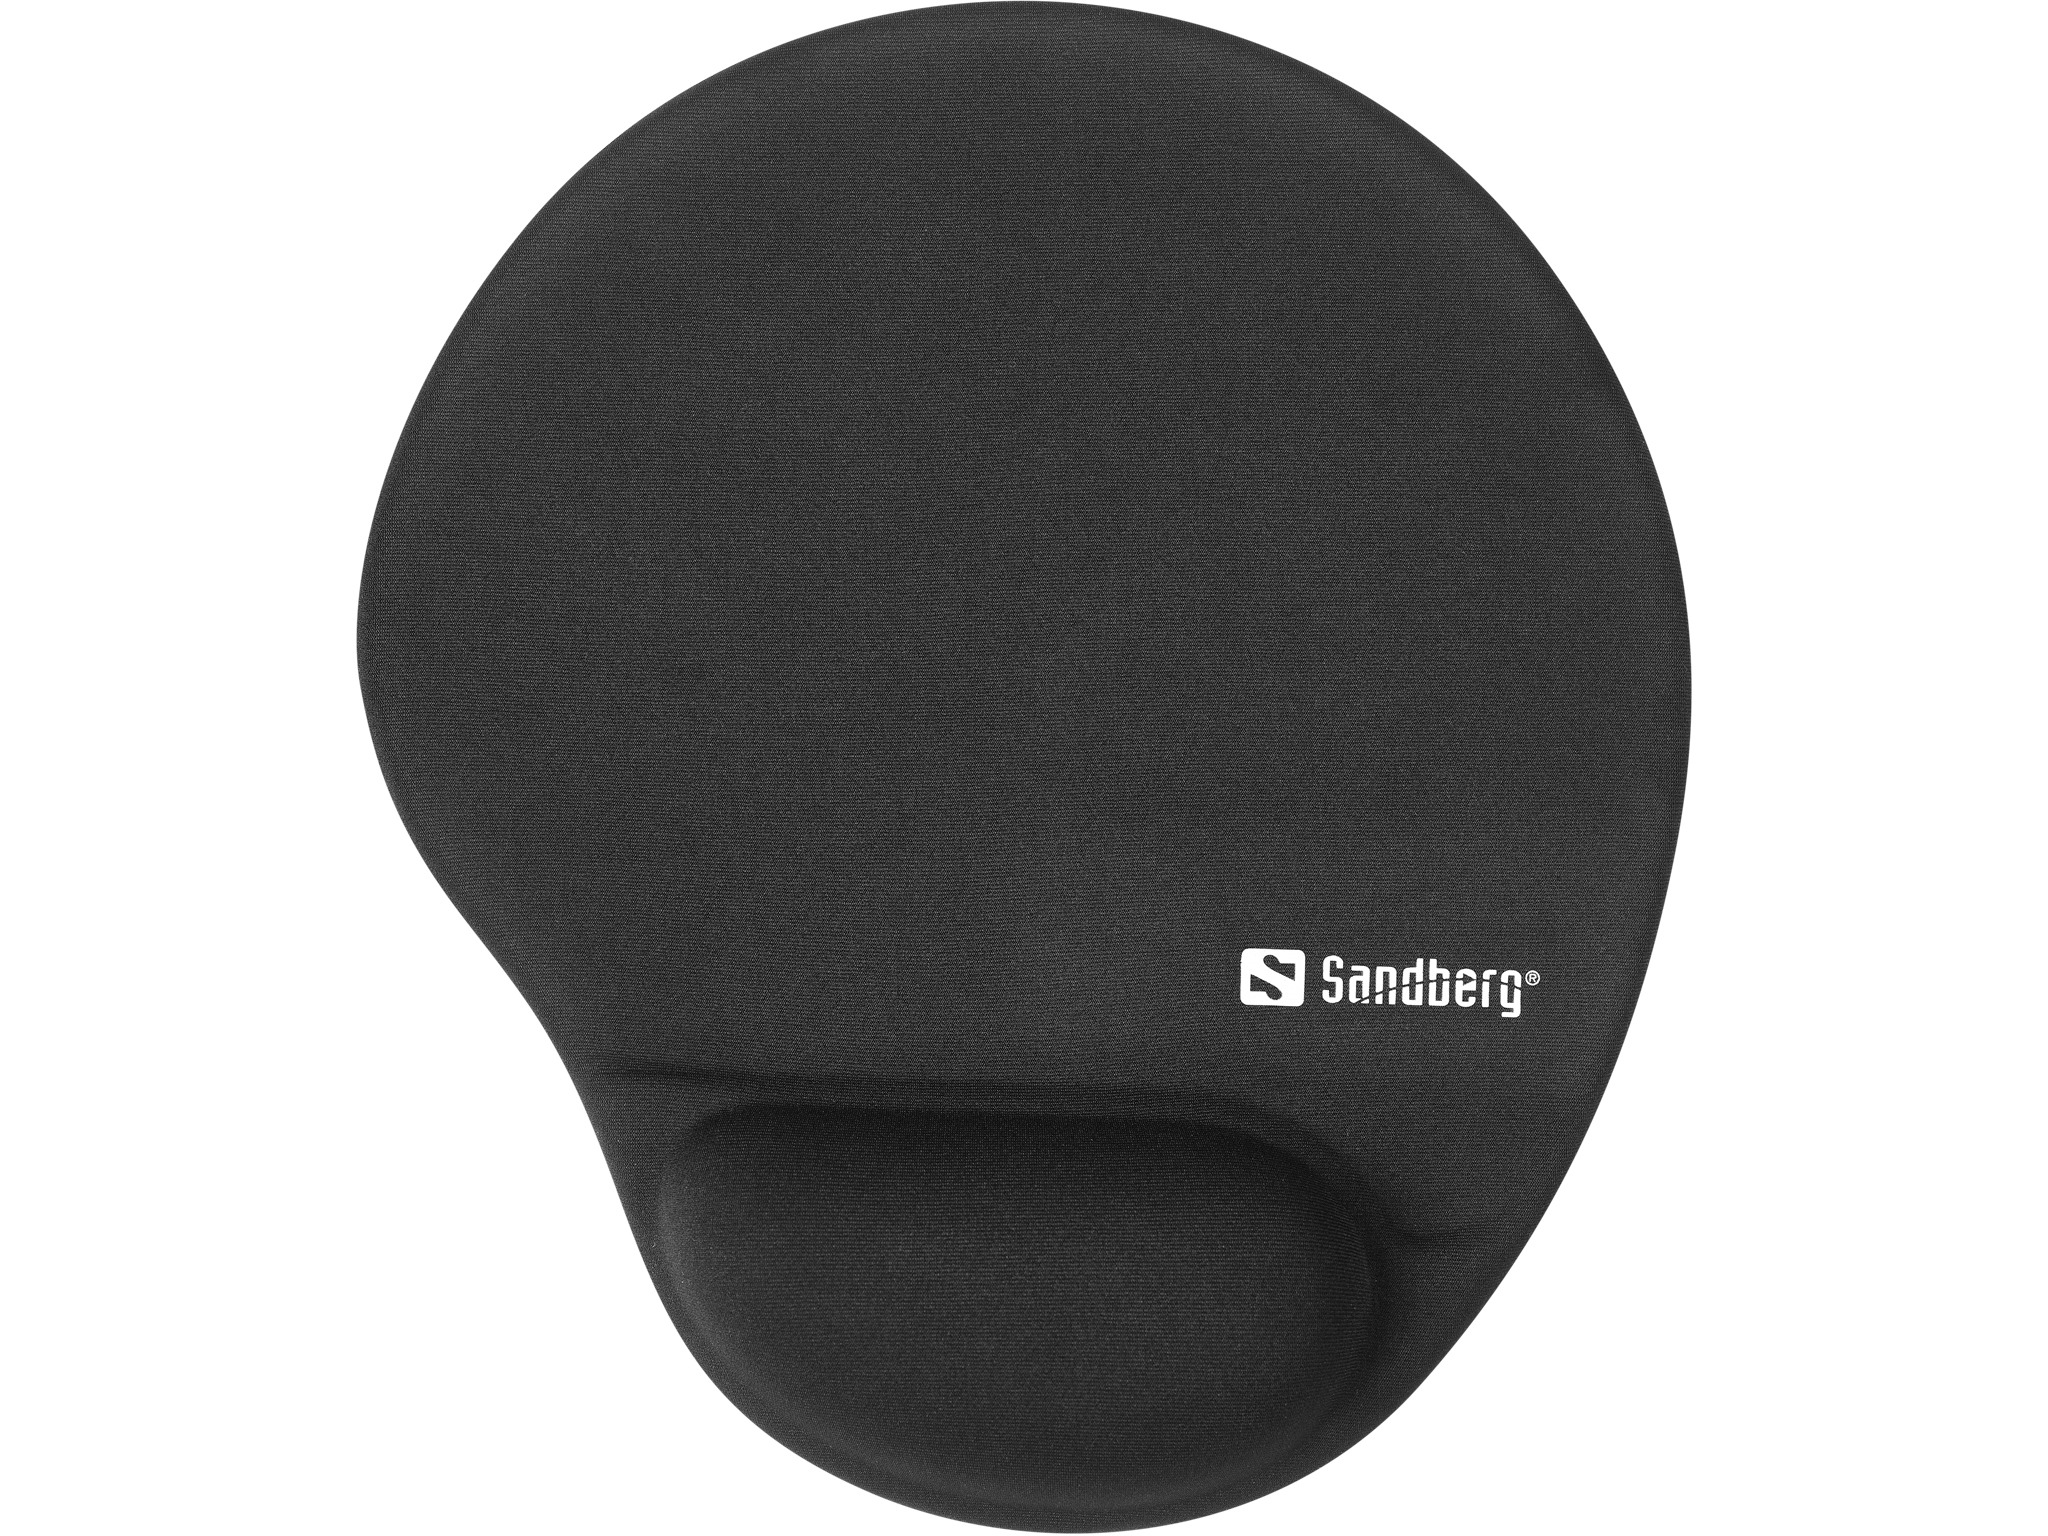 Sandberg 520-37 Memory Foam Mousepad Round